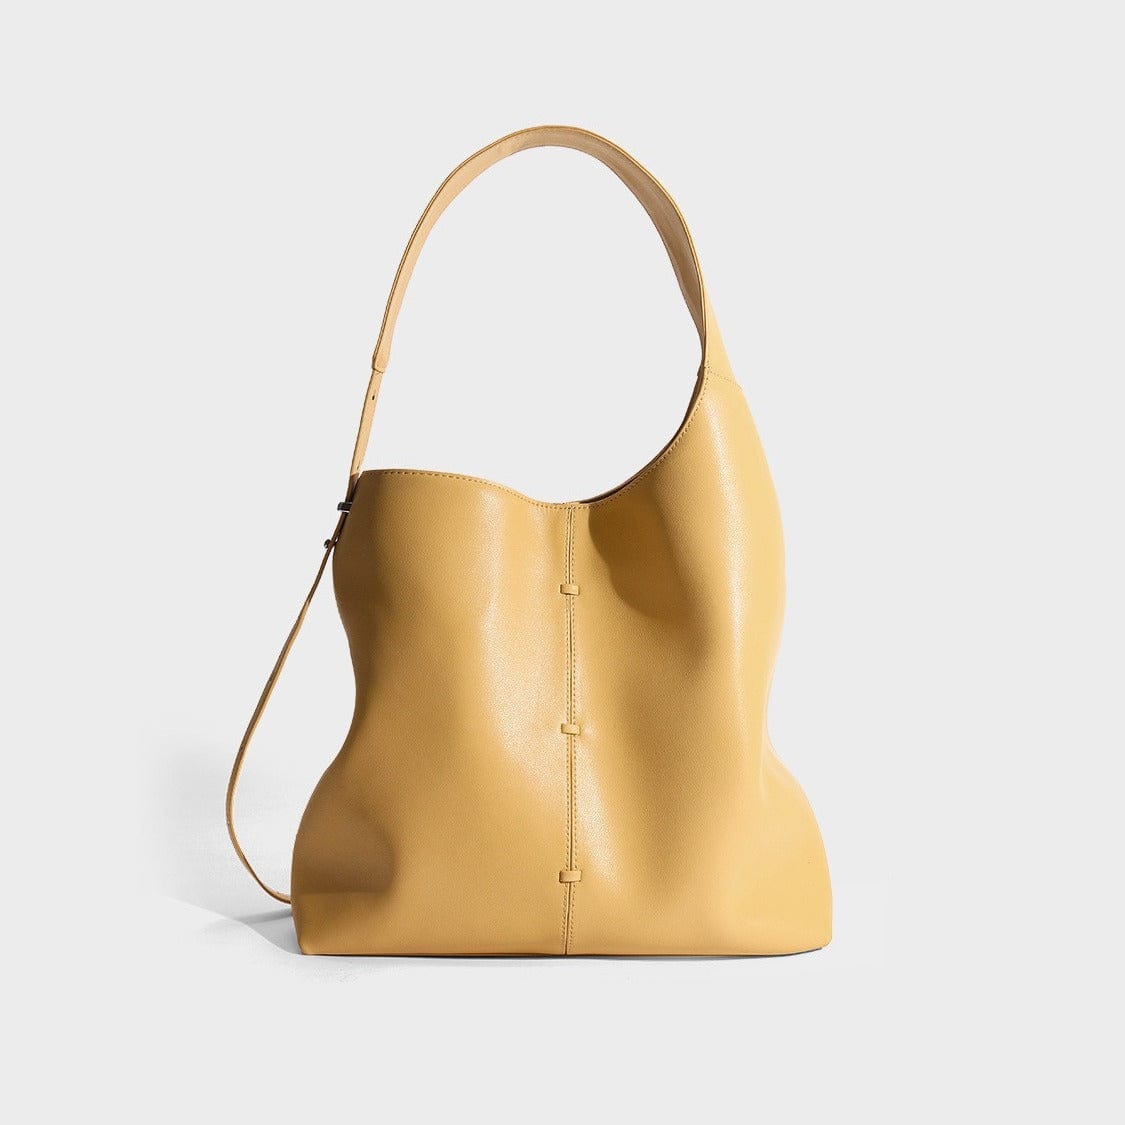 a yellow handbag on a white background2